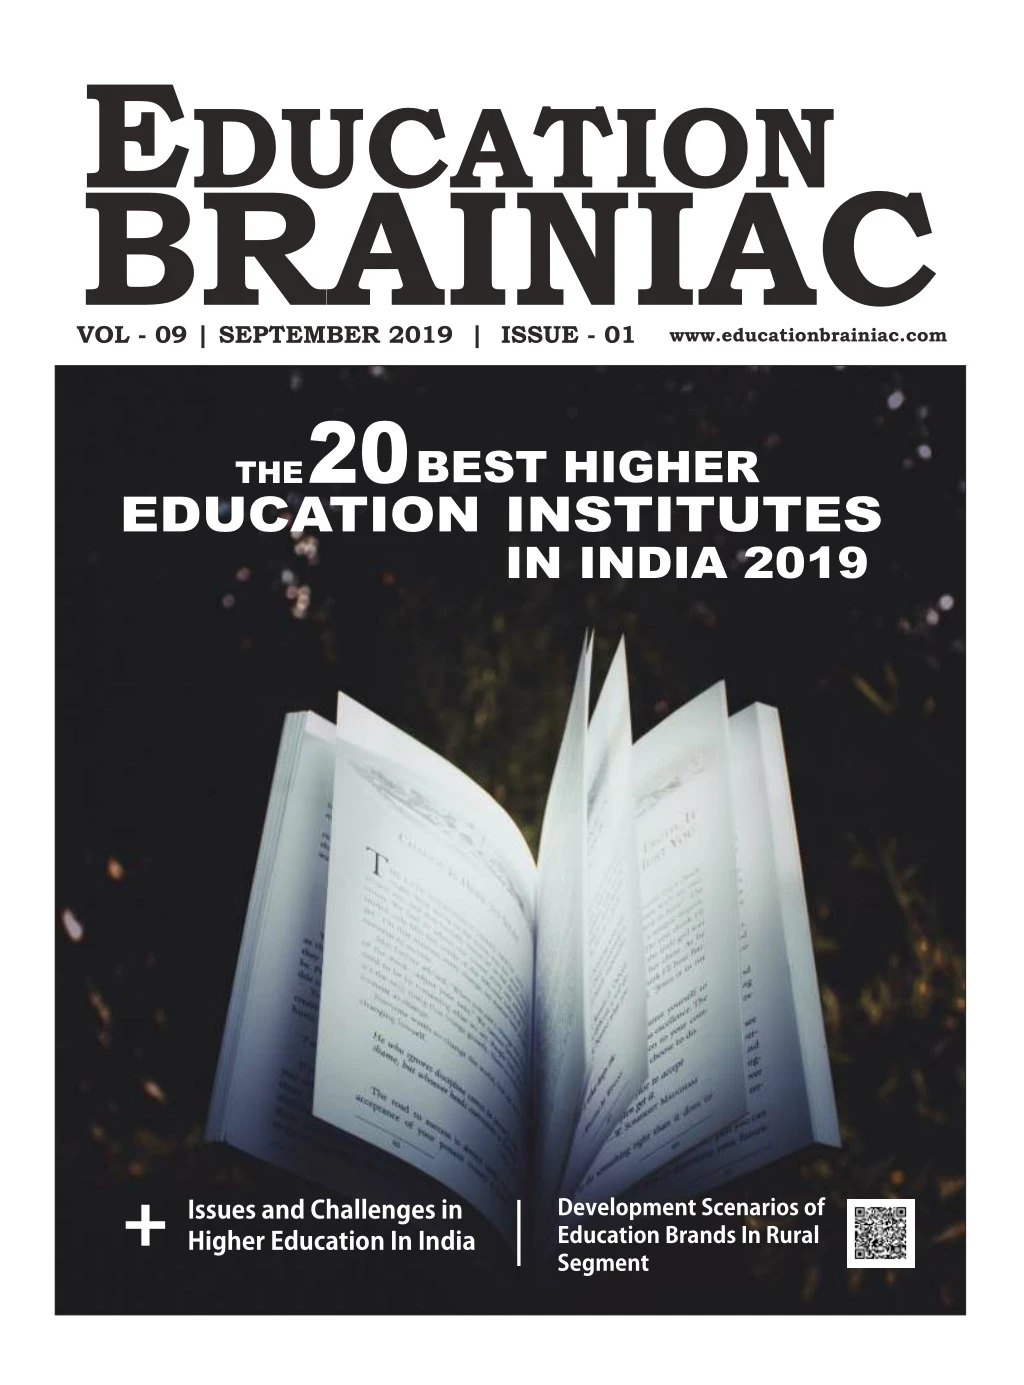 e ducation brainiac 20 education institutes